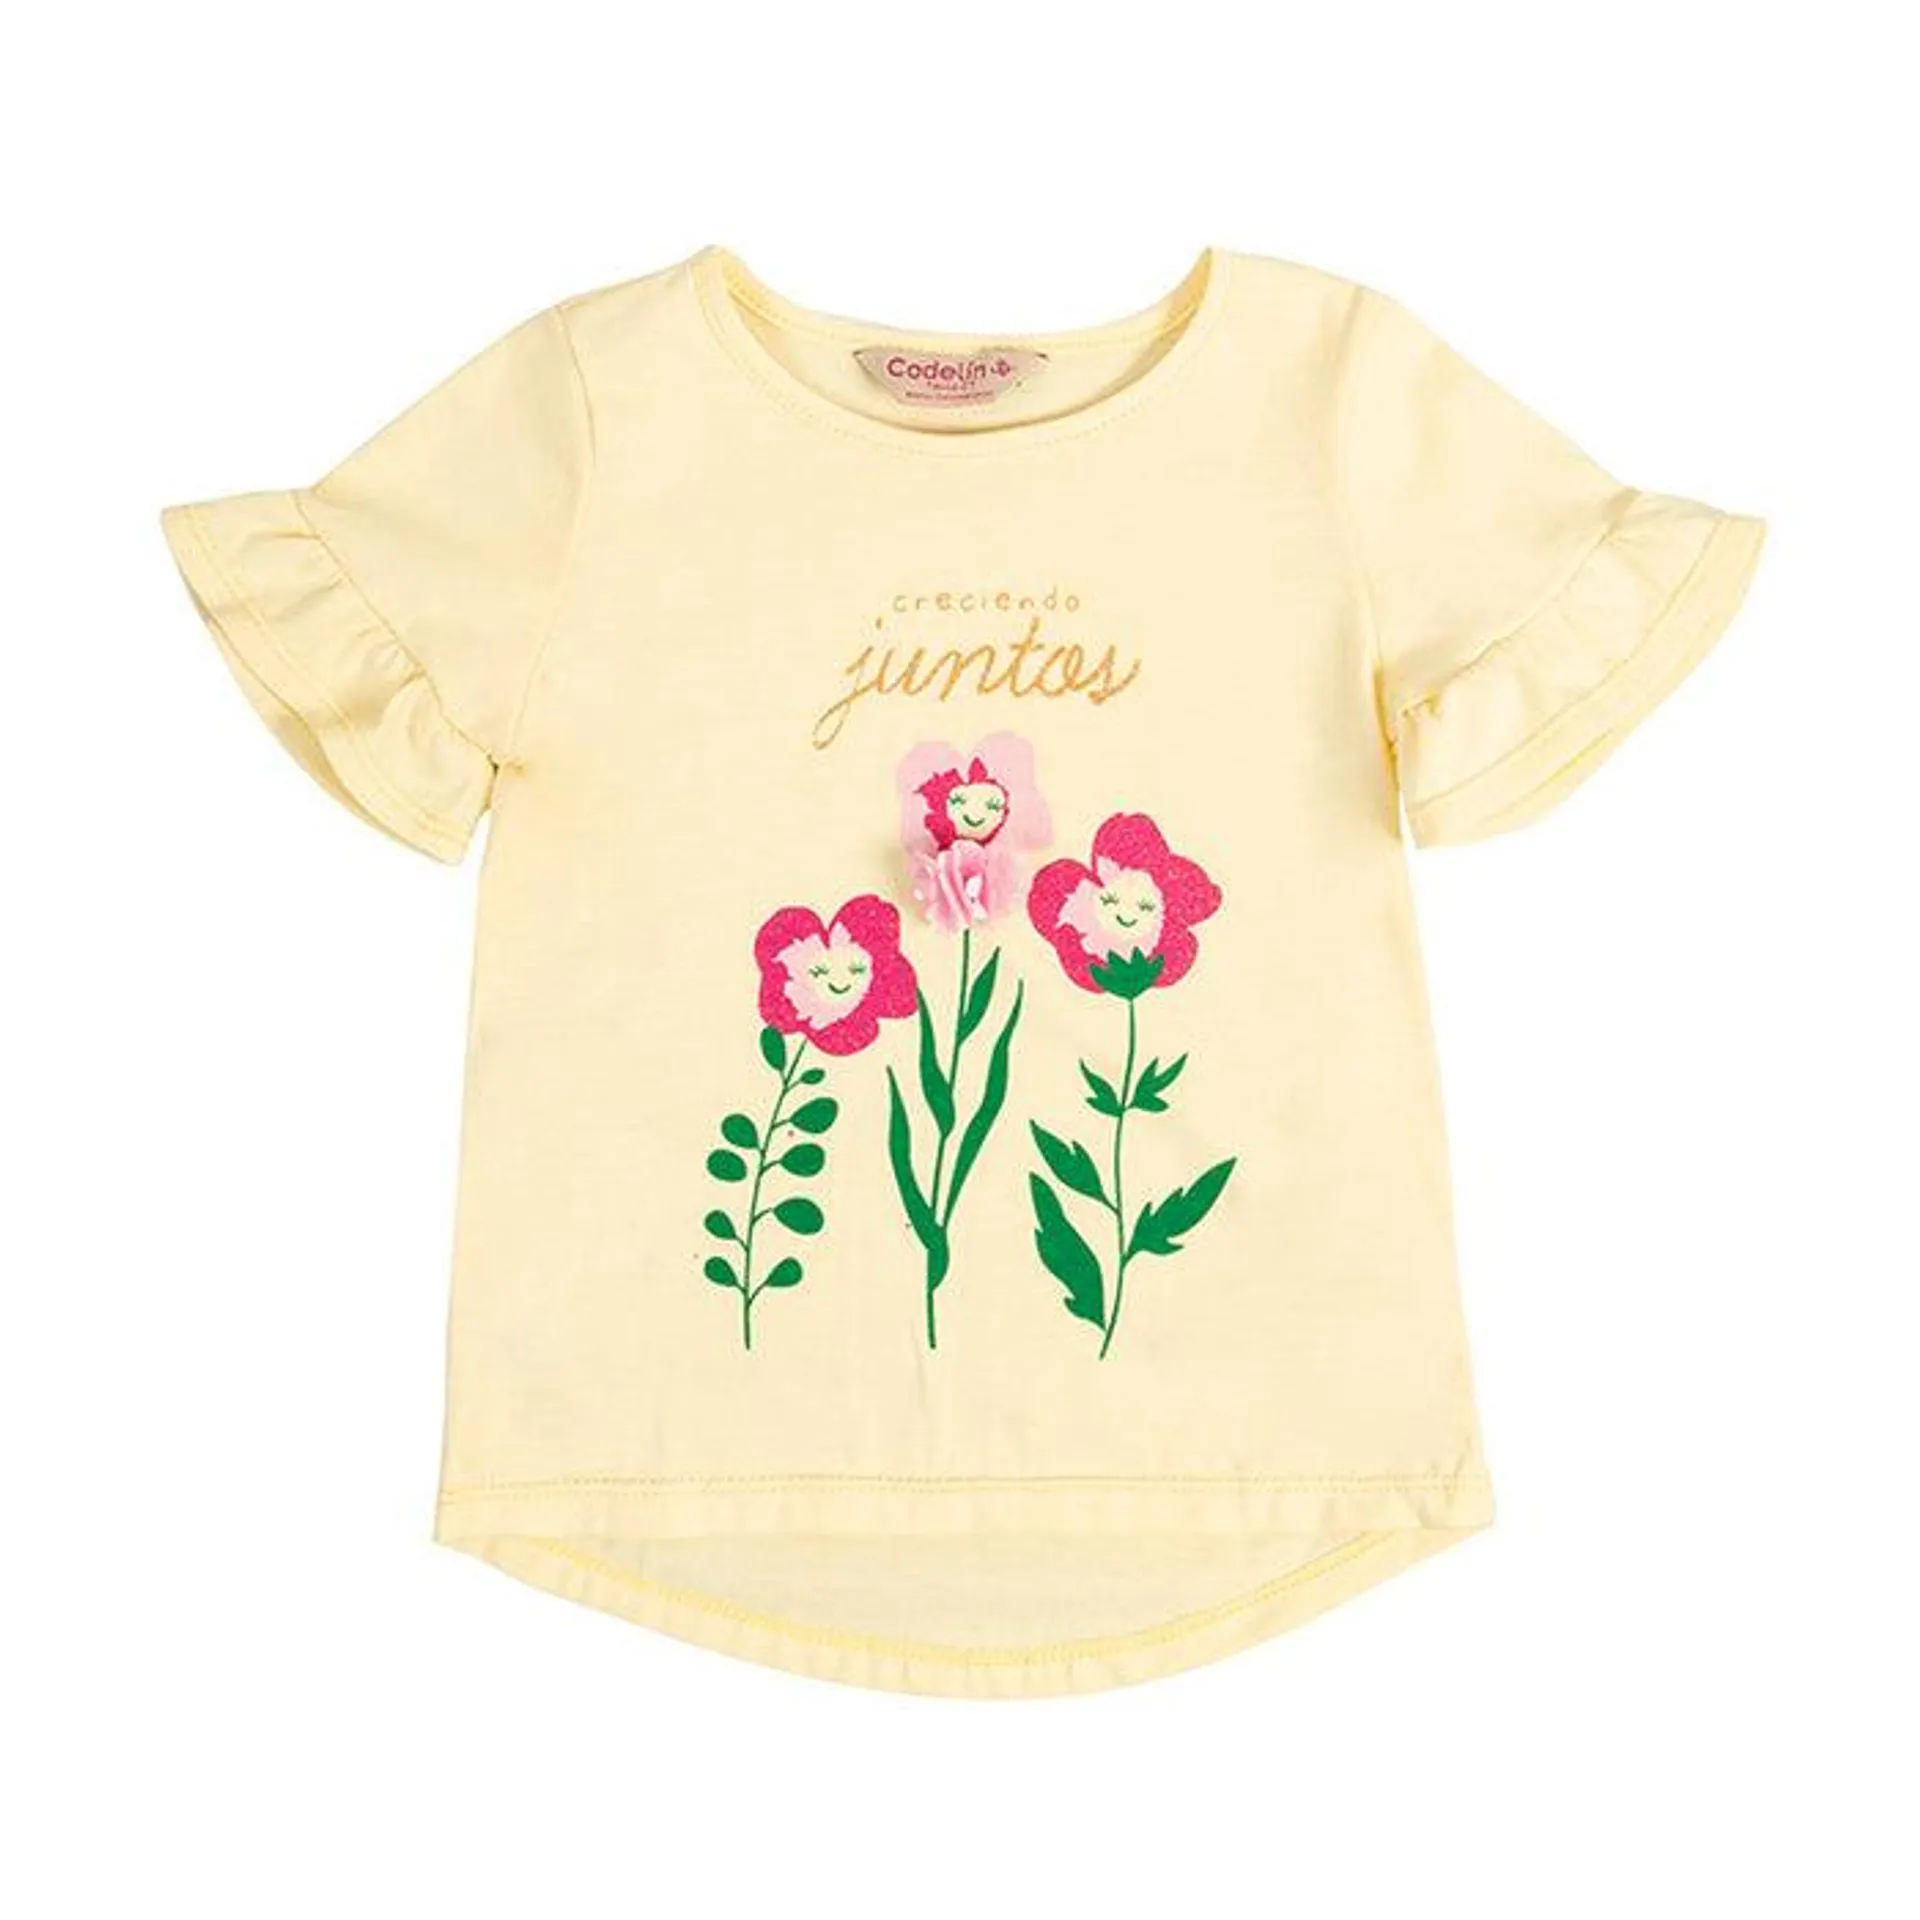 Camiseta Dalia amarillo claro manga corta para bebé niña